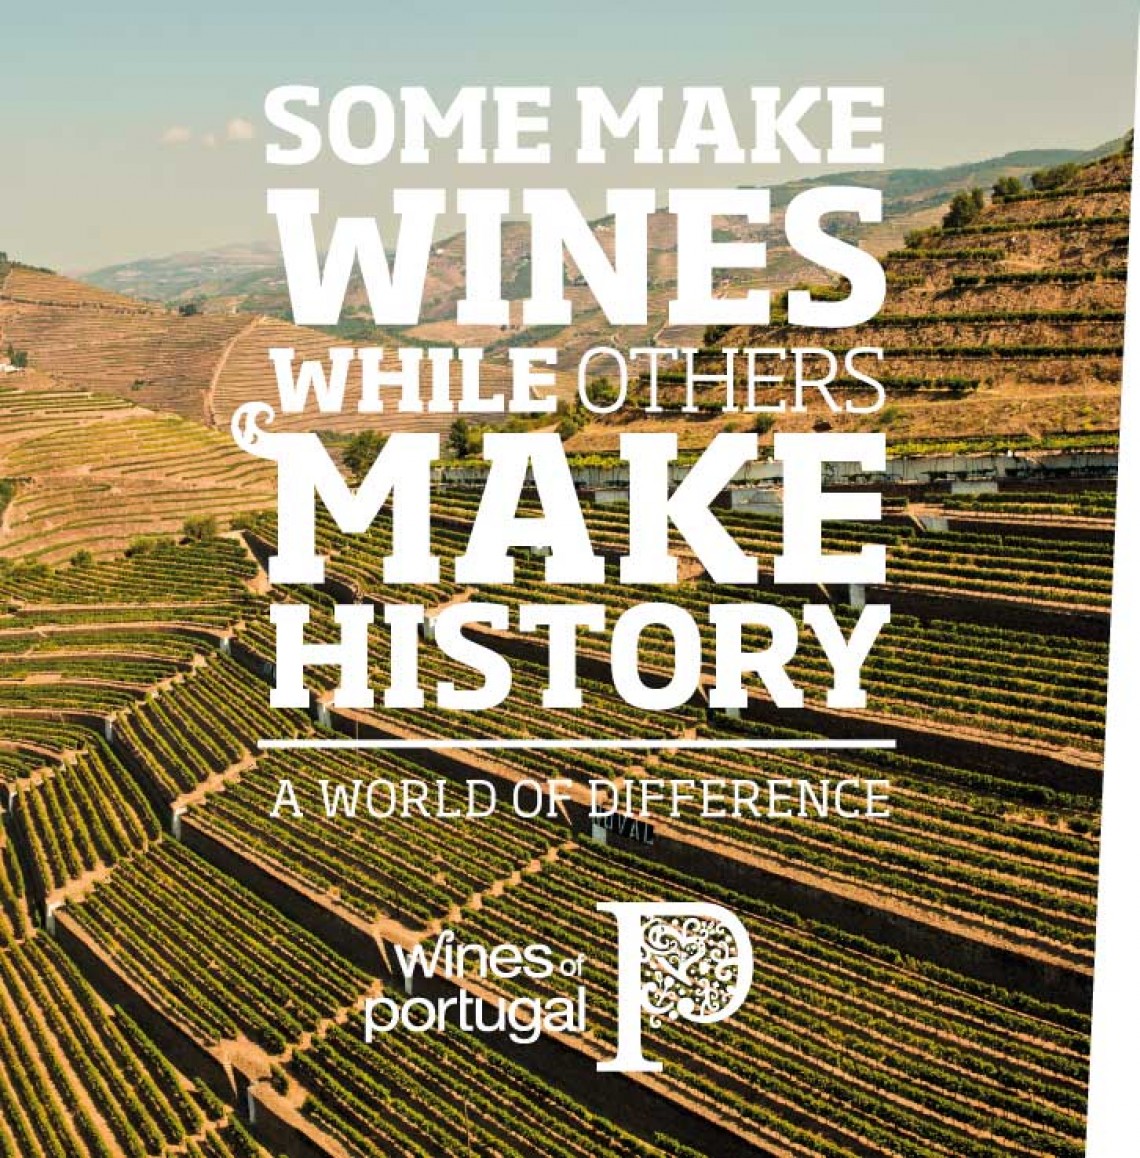 Wines of Portugal Food Truck Sommelier Slam 2015 in San Francisco